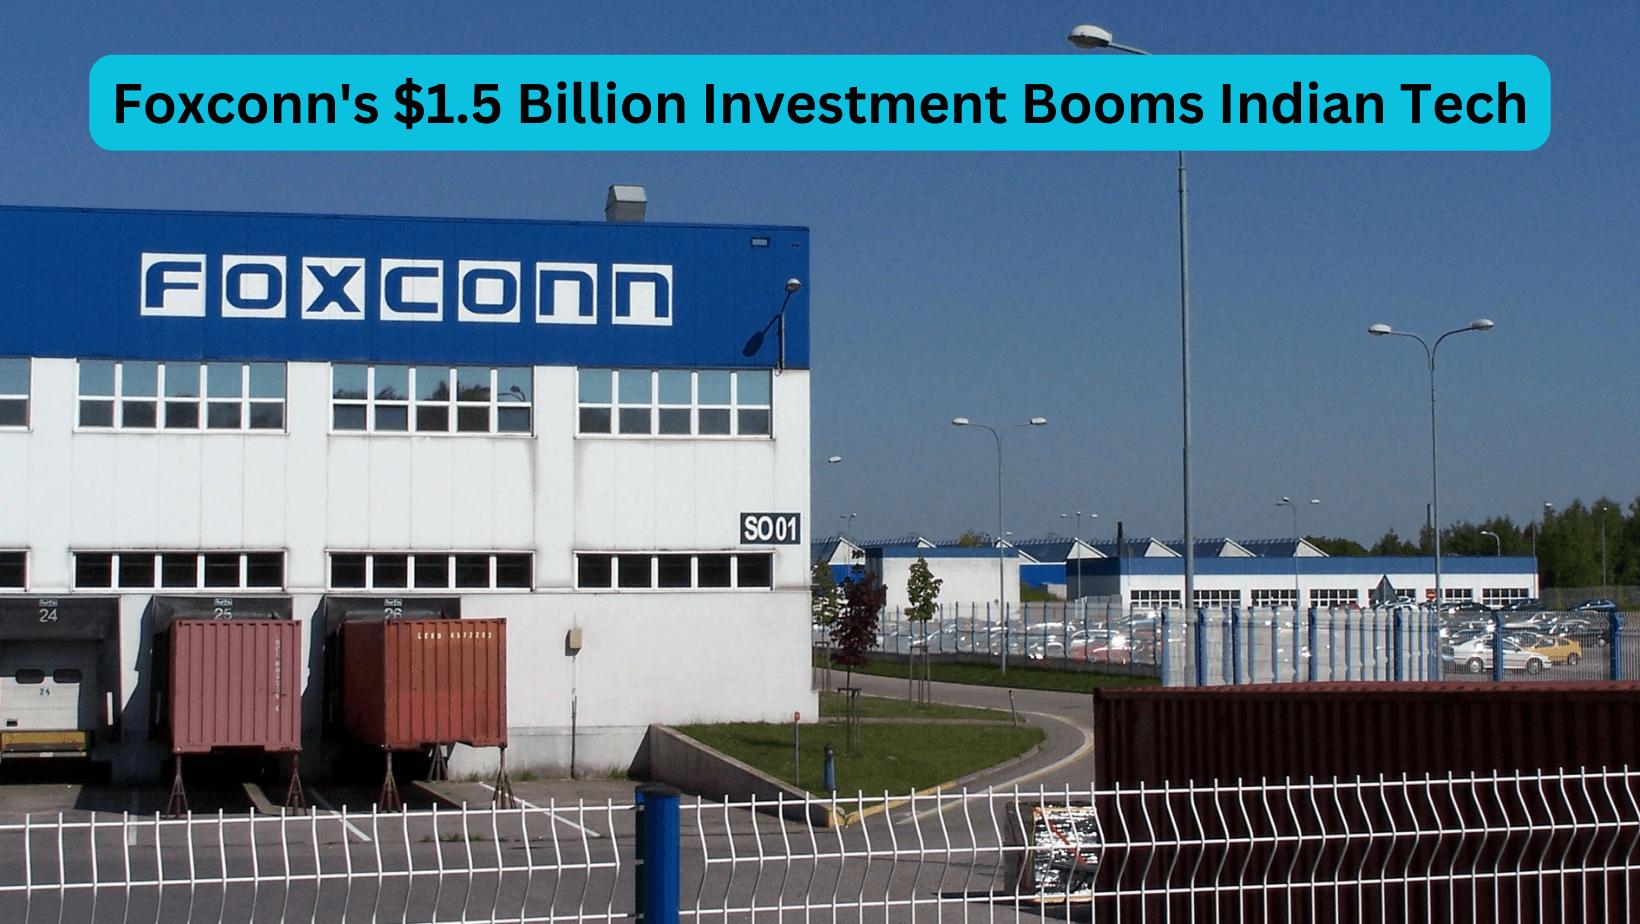 Foxconn’s $1.5 Billion Investment Booms Indian Tech